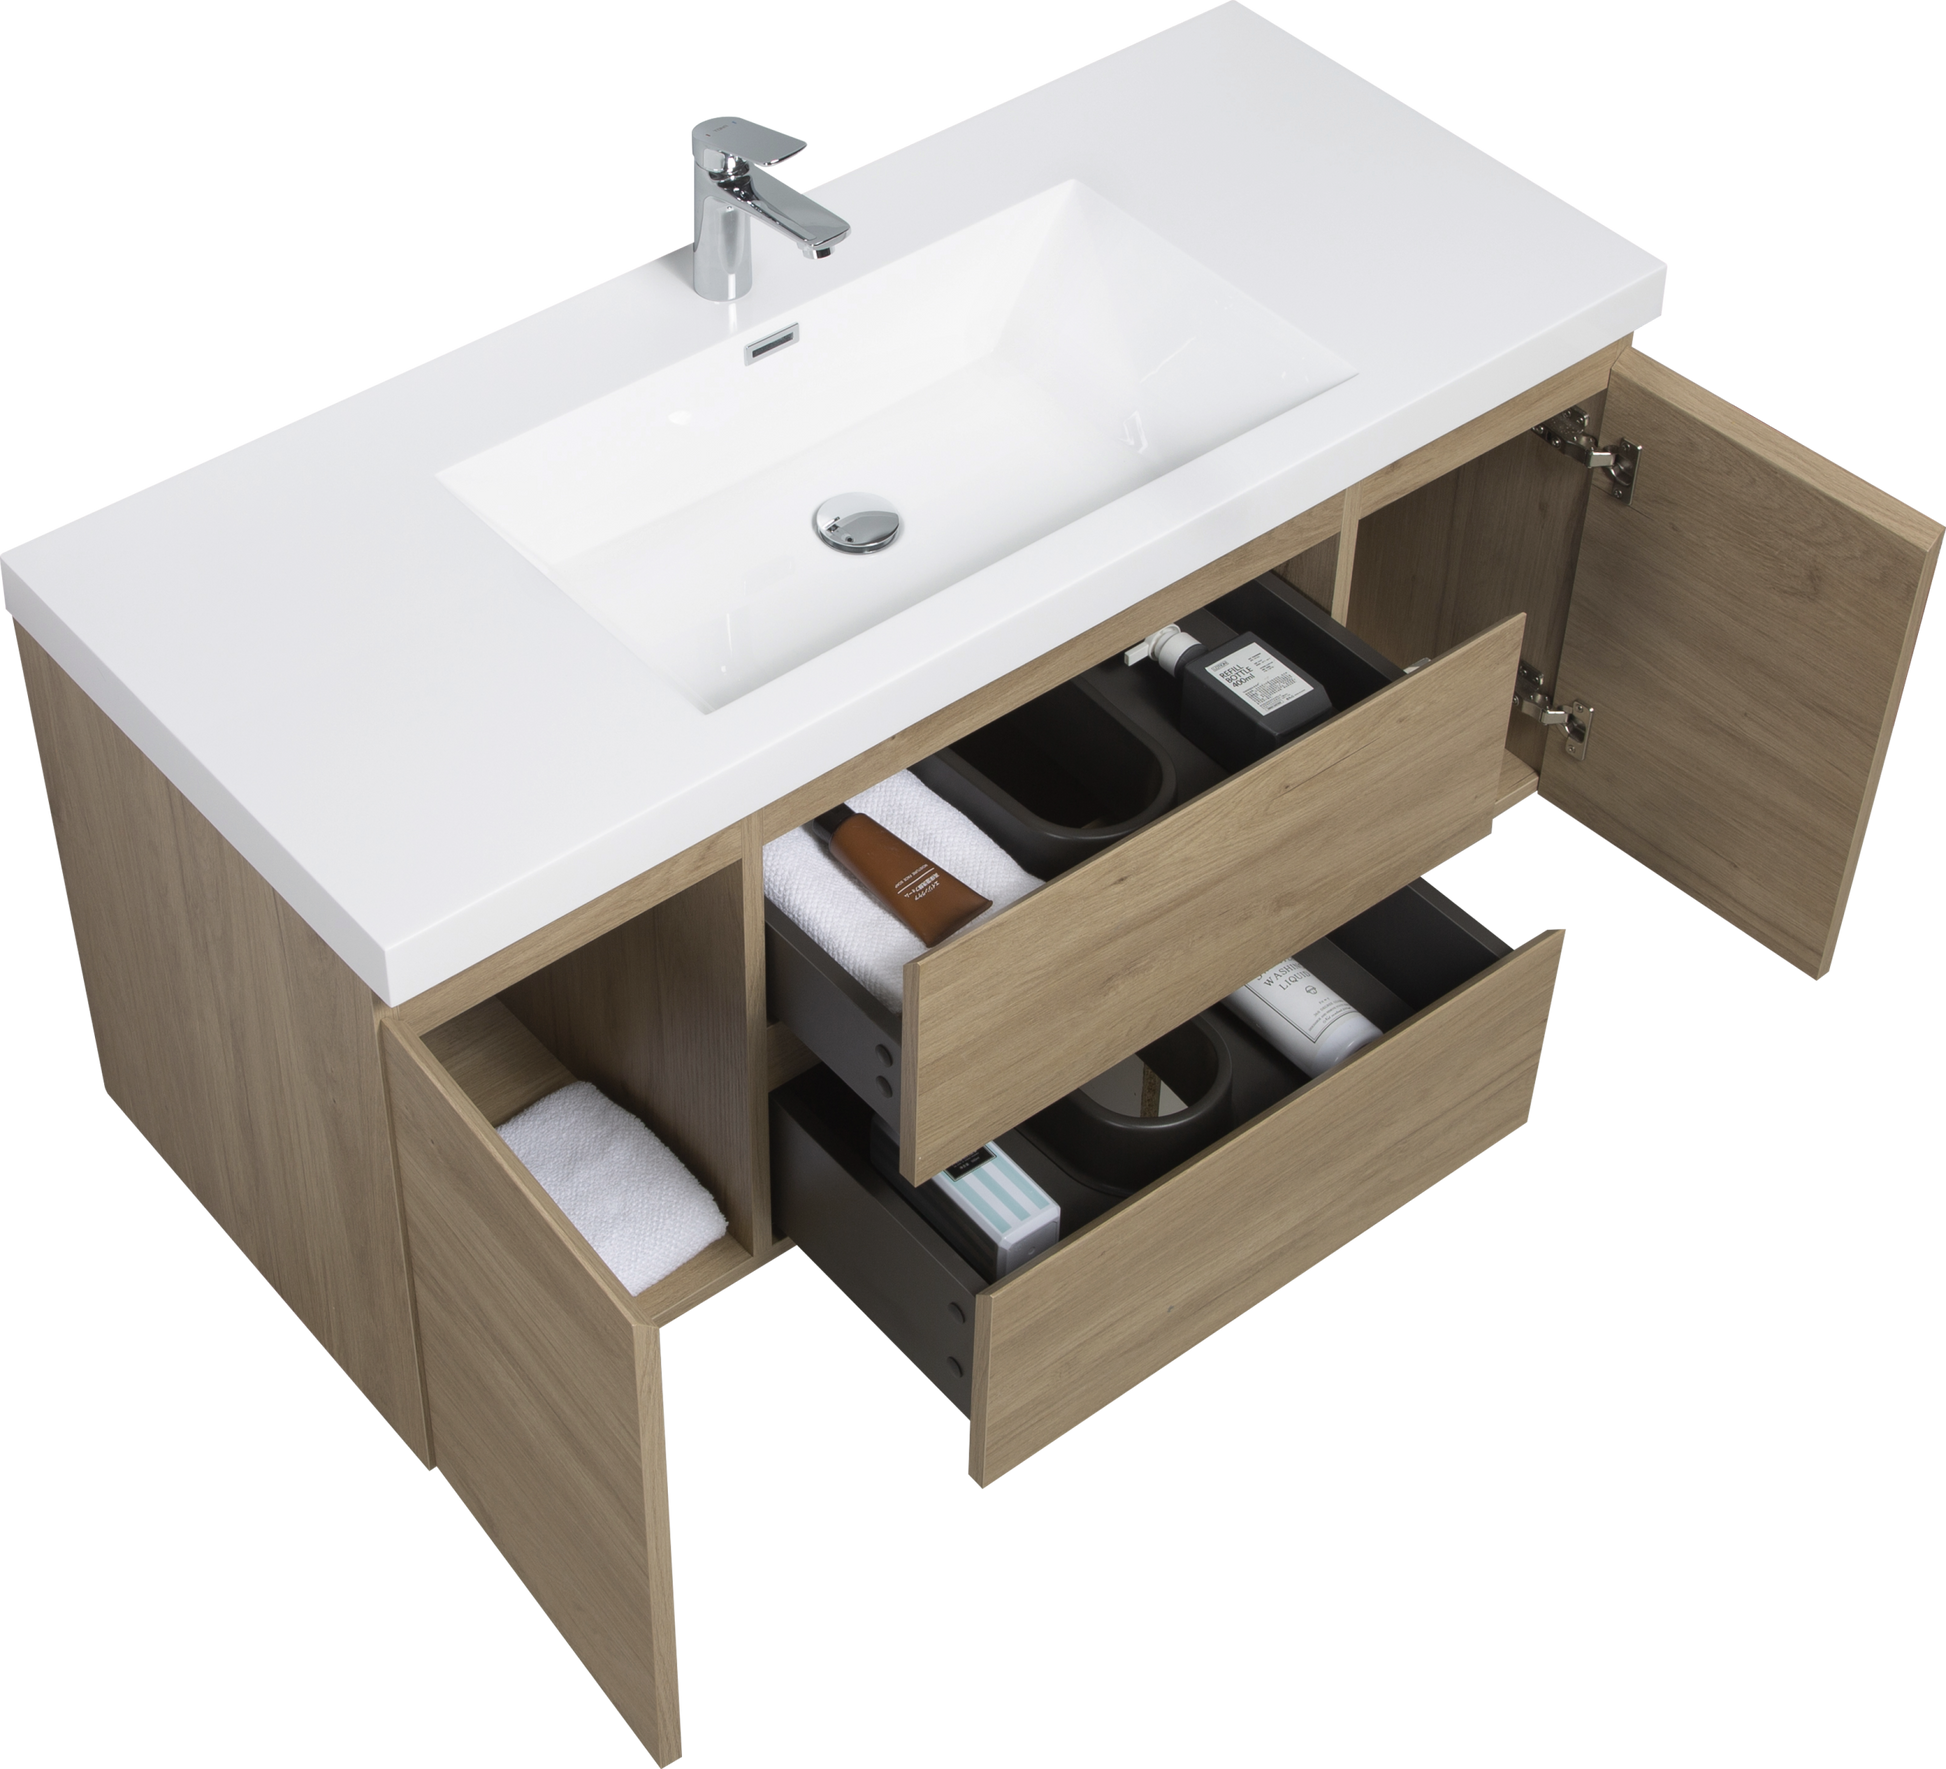 48" Floating Bathroom Vanity with Sink, Modern Wall 2-oak-2-bathroom-wall mounted-melamine